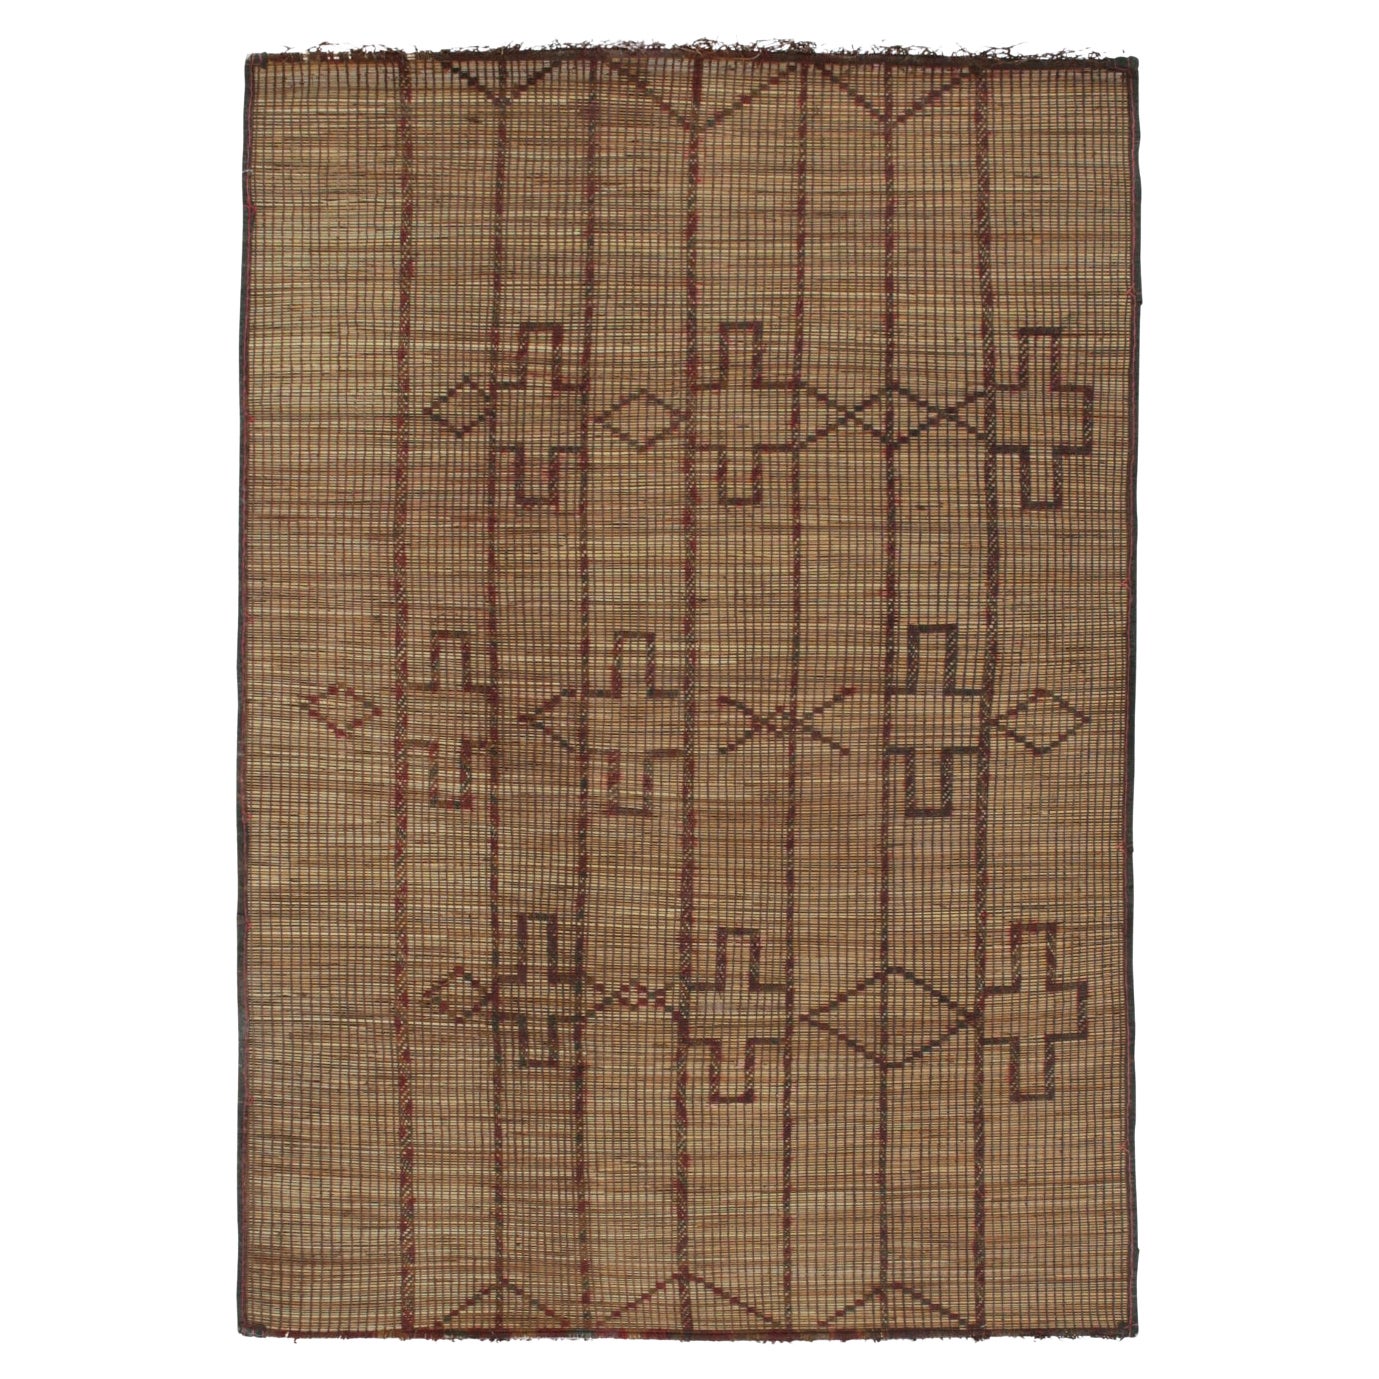 Vintage Moroccan Tuareg Mat in Beige & Brown Geometric Pattern, from Rug & Kilim